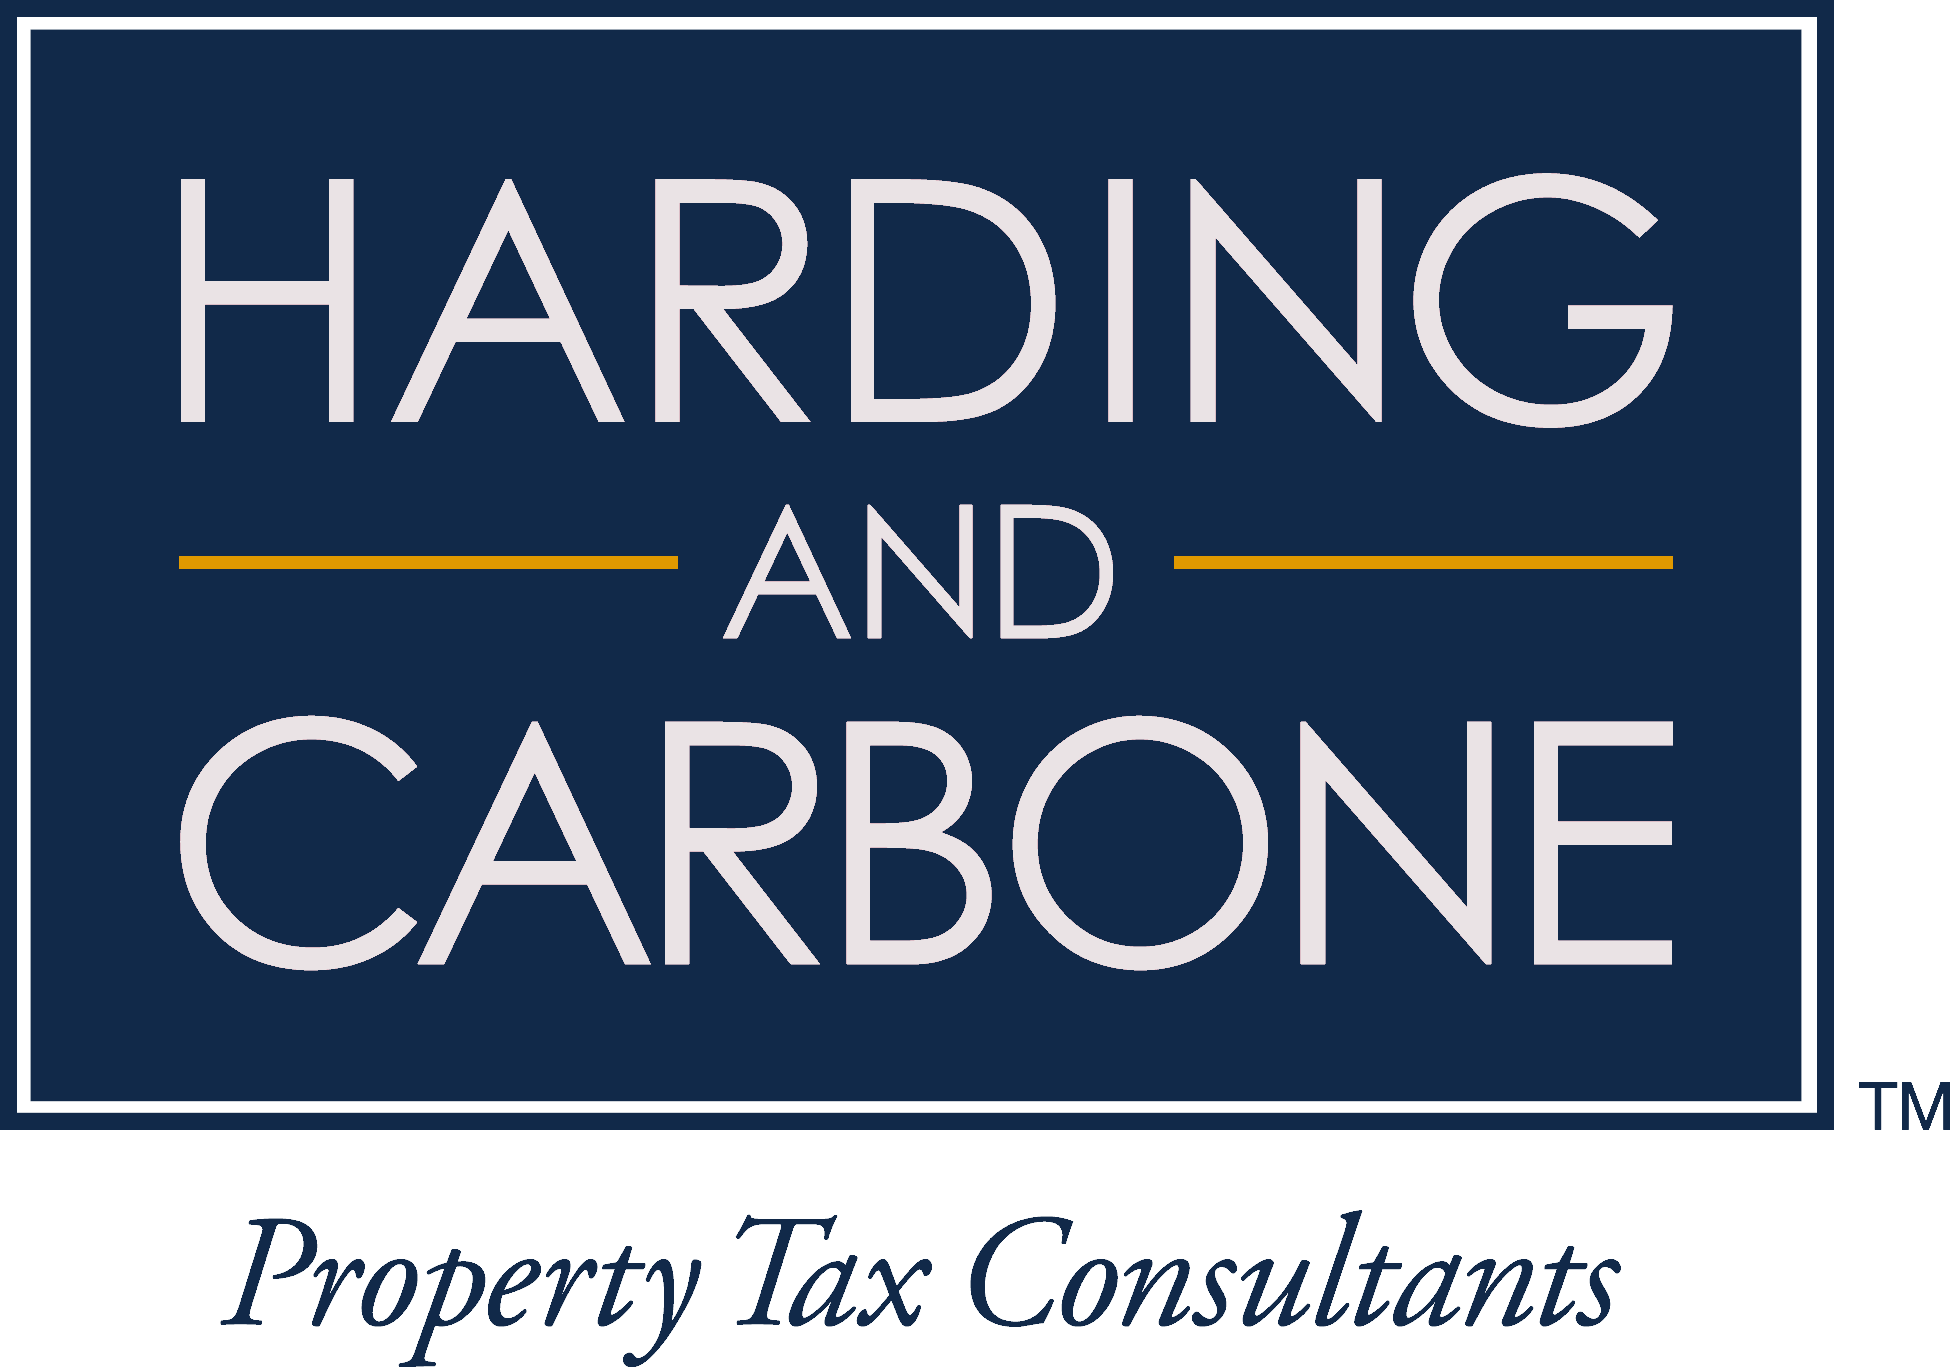 Harding & Carbone